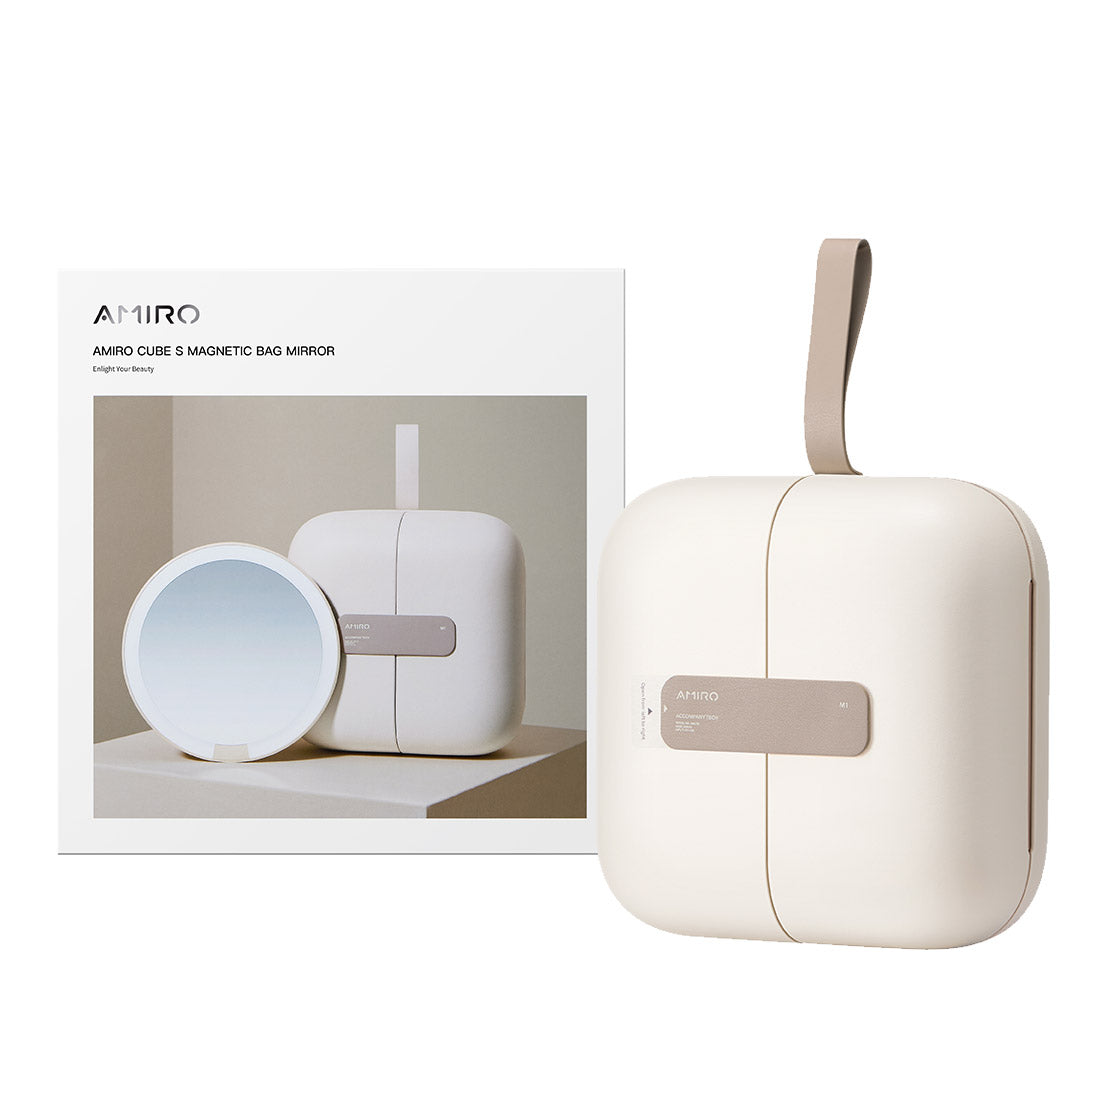 AMIRO Cube S Portable LED Magnetic Bag Mirror - White